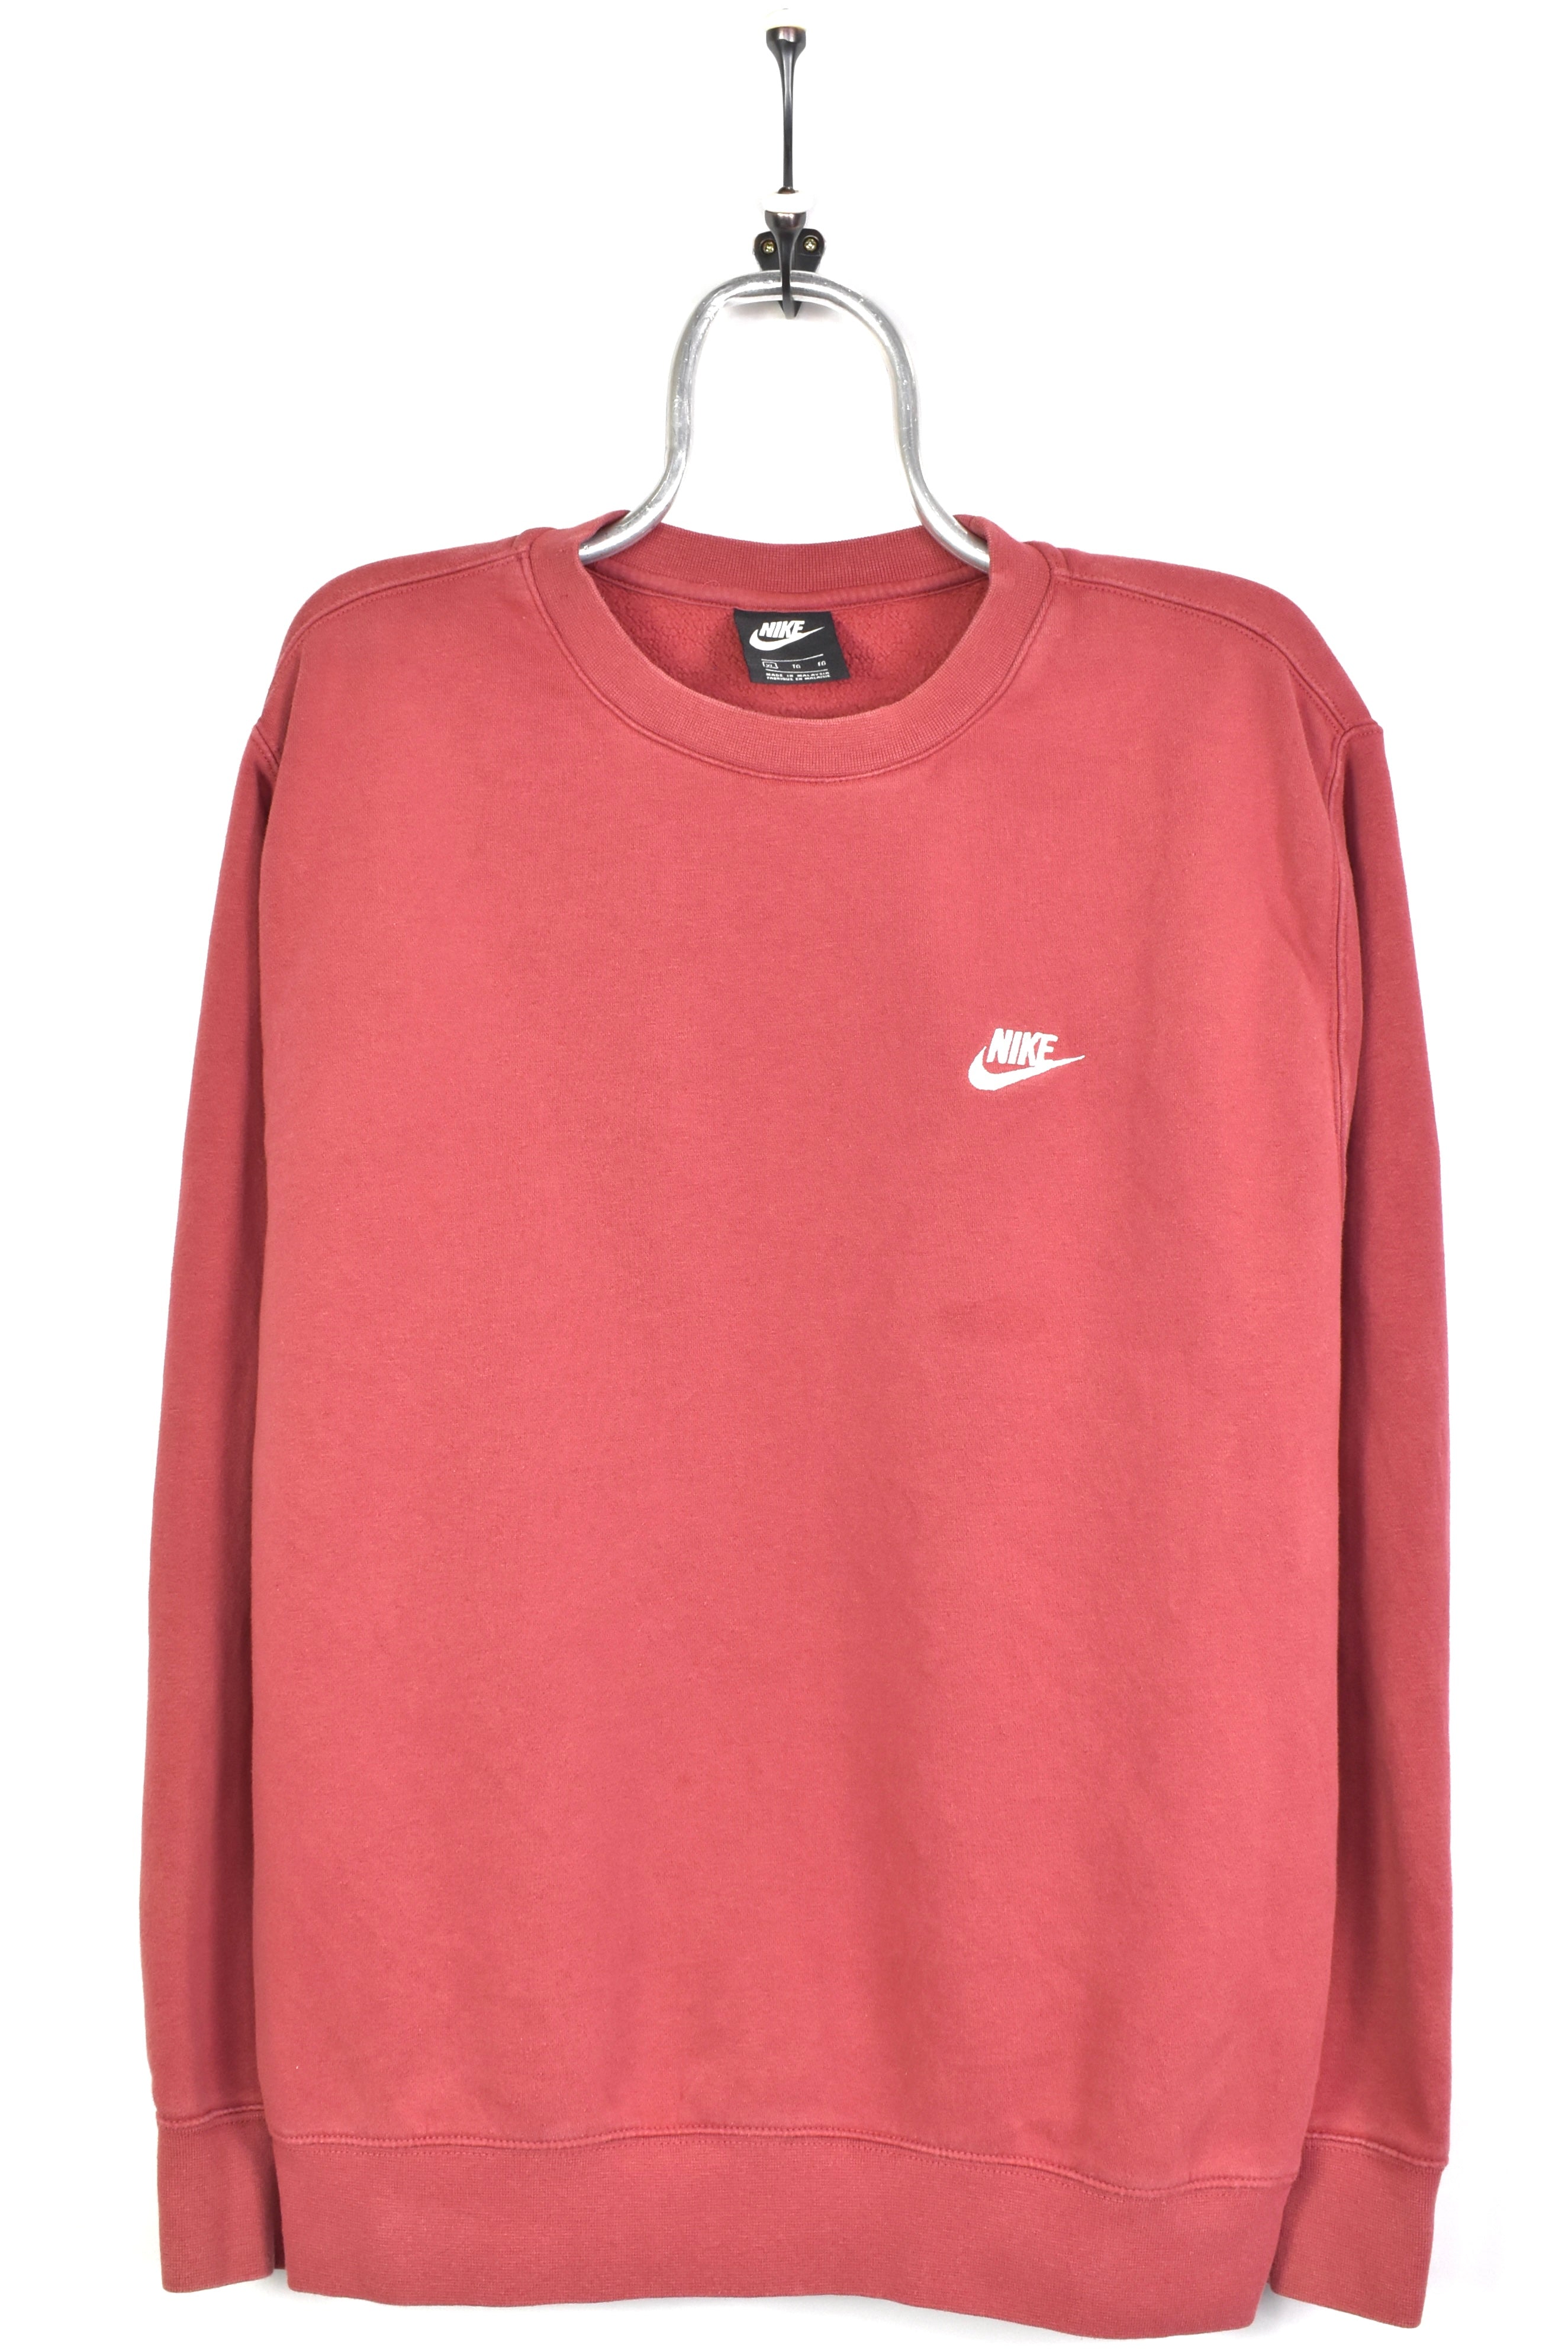 Vintage Nike sweatshirt, long sleeve embroidered crewneck - XL, burgundy NIKE